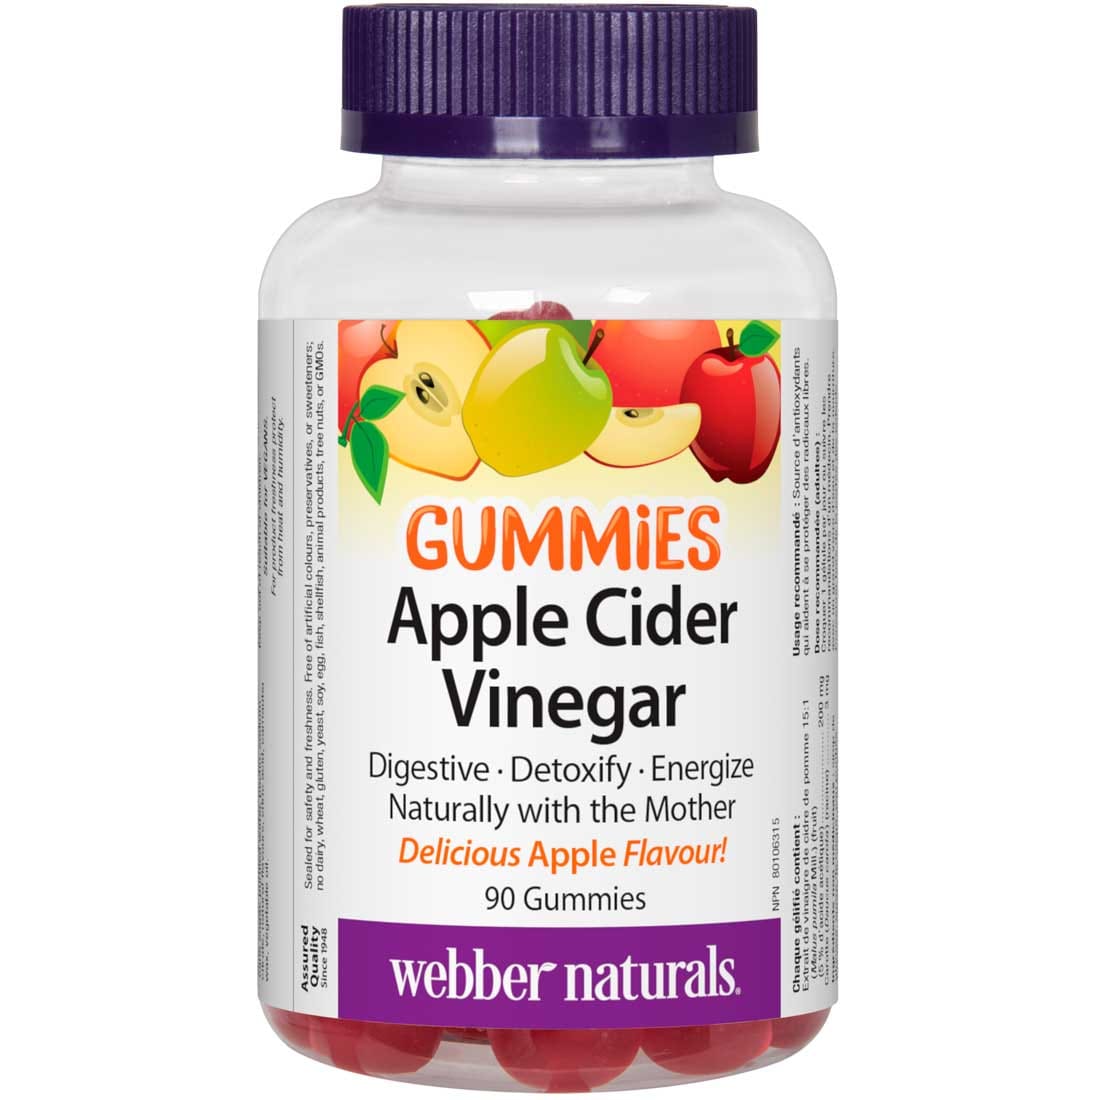 Webber Naturals Apple Cider Vinegar Gummies 200mg with Mother, 90 Gummies